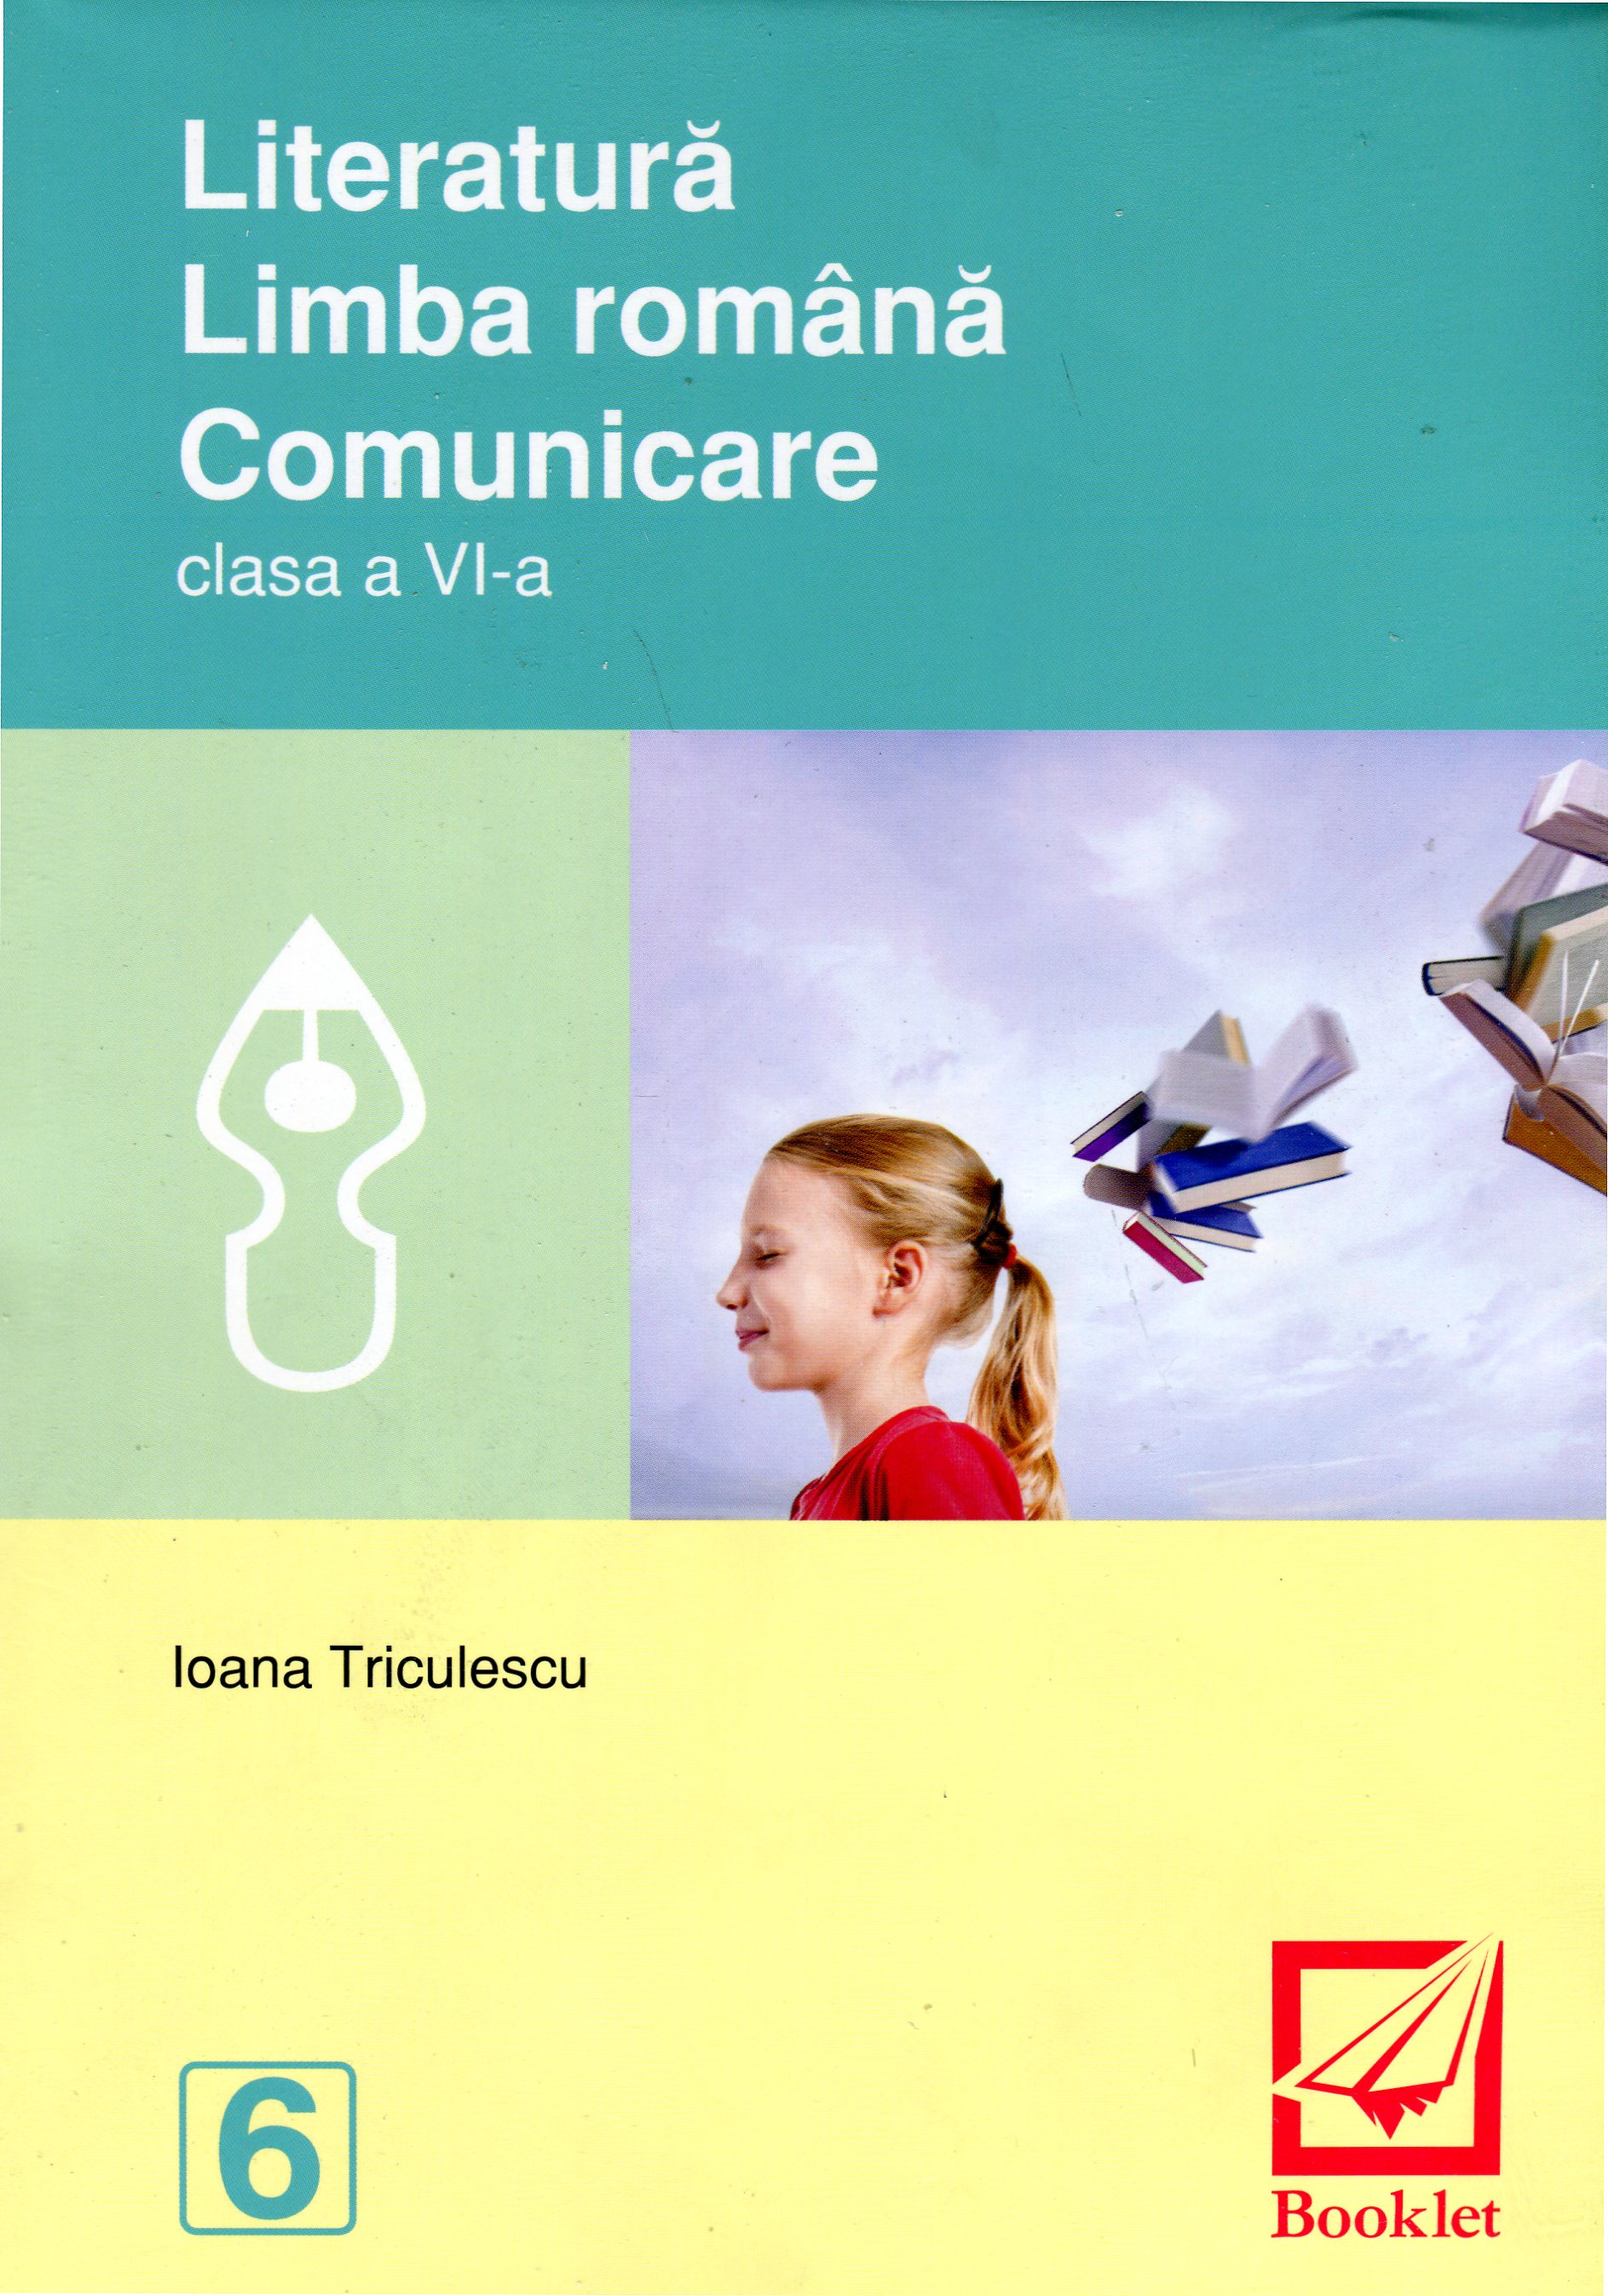 Literatura. Limba romana. Comunicare cls 6 - Ioana Triculescu